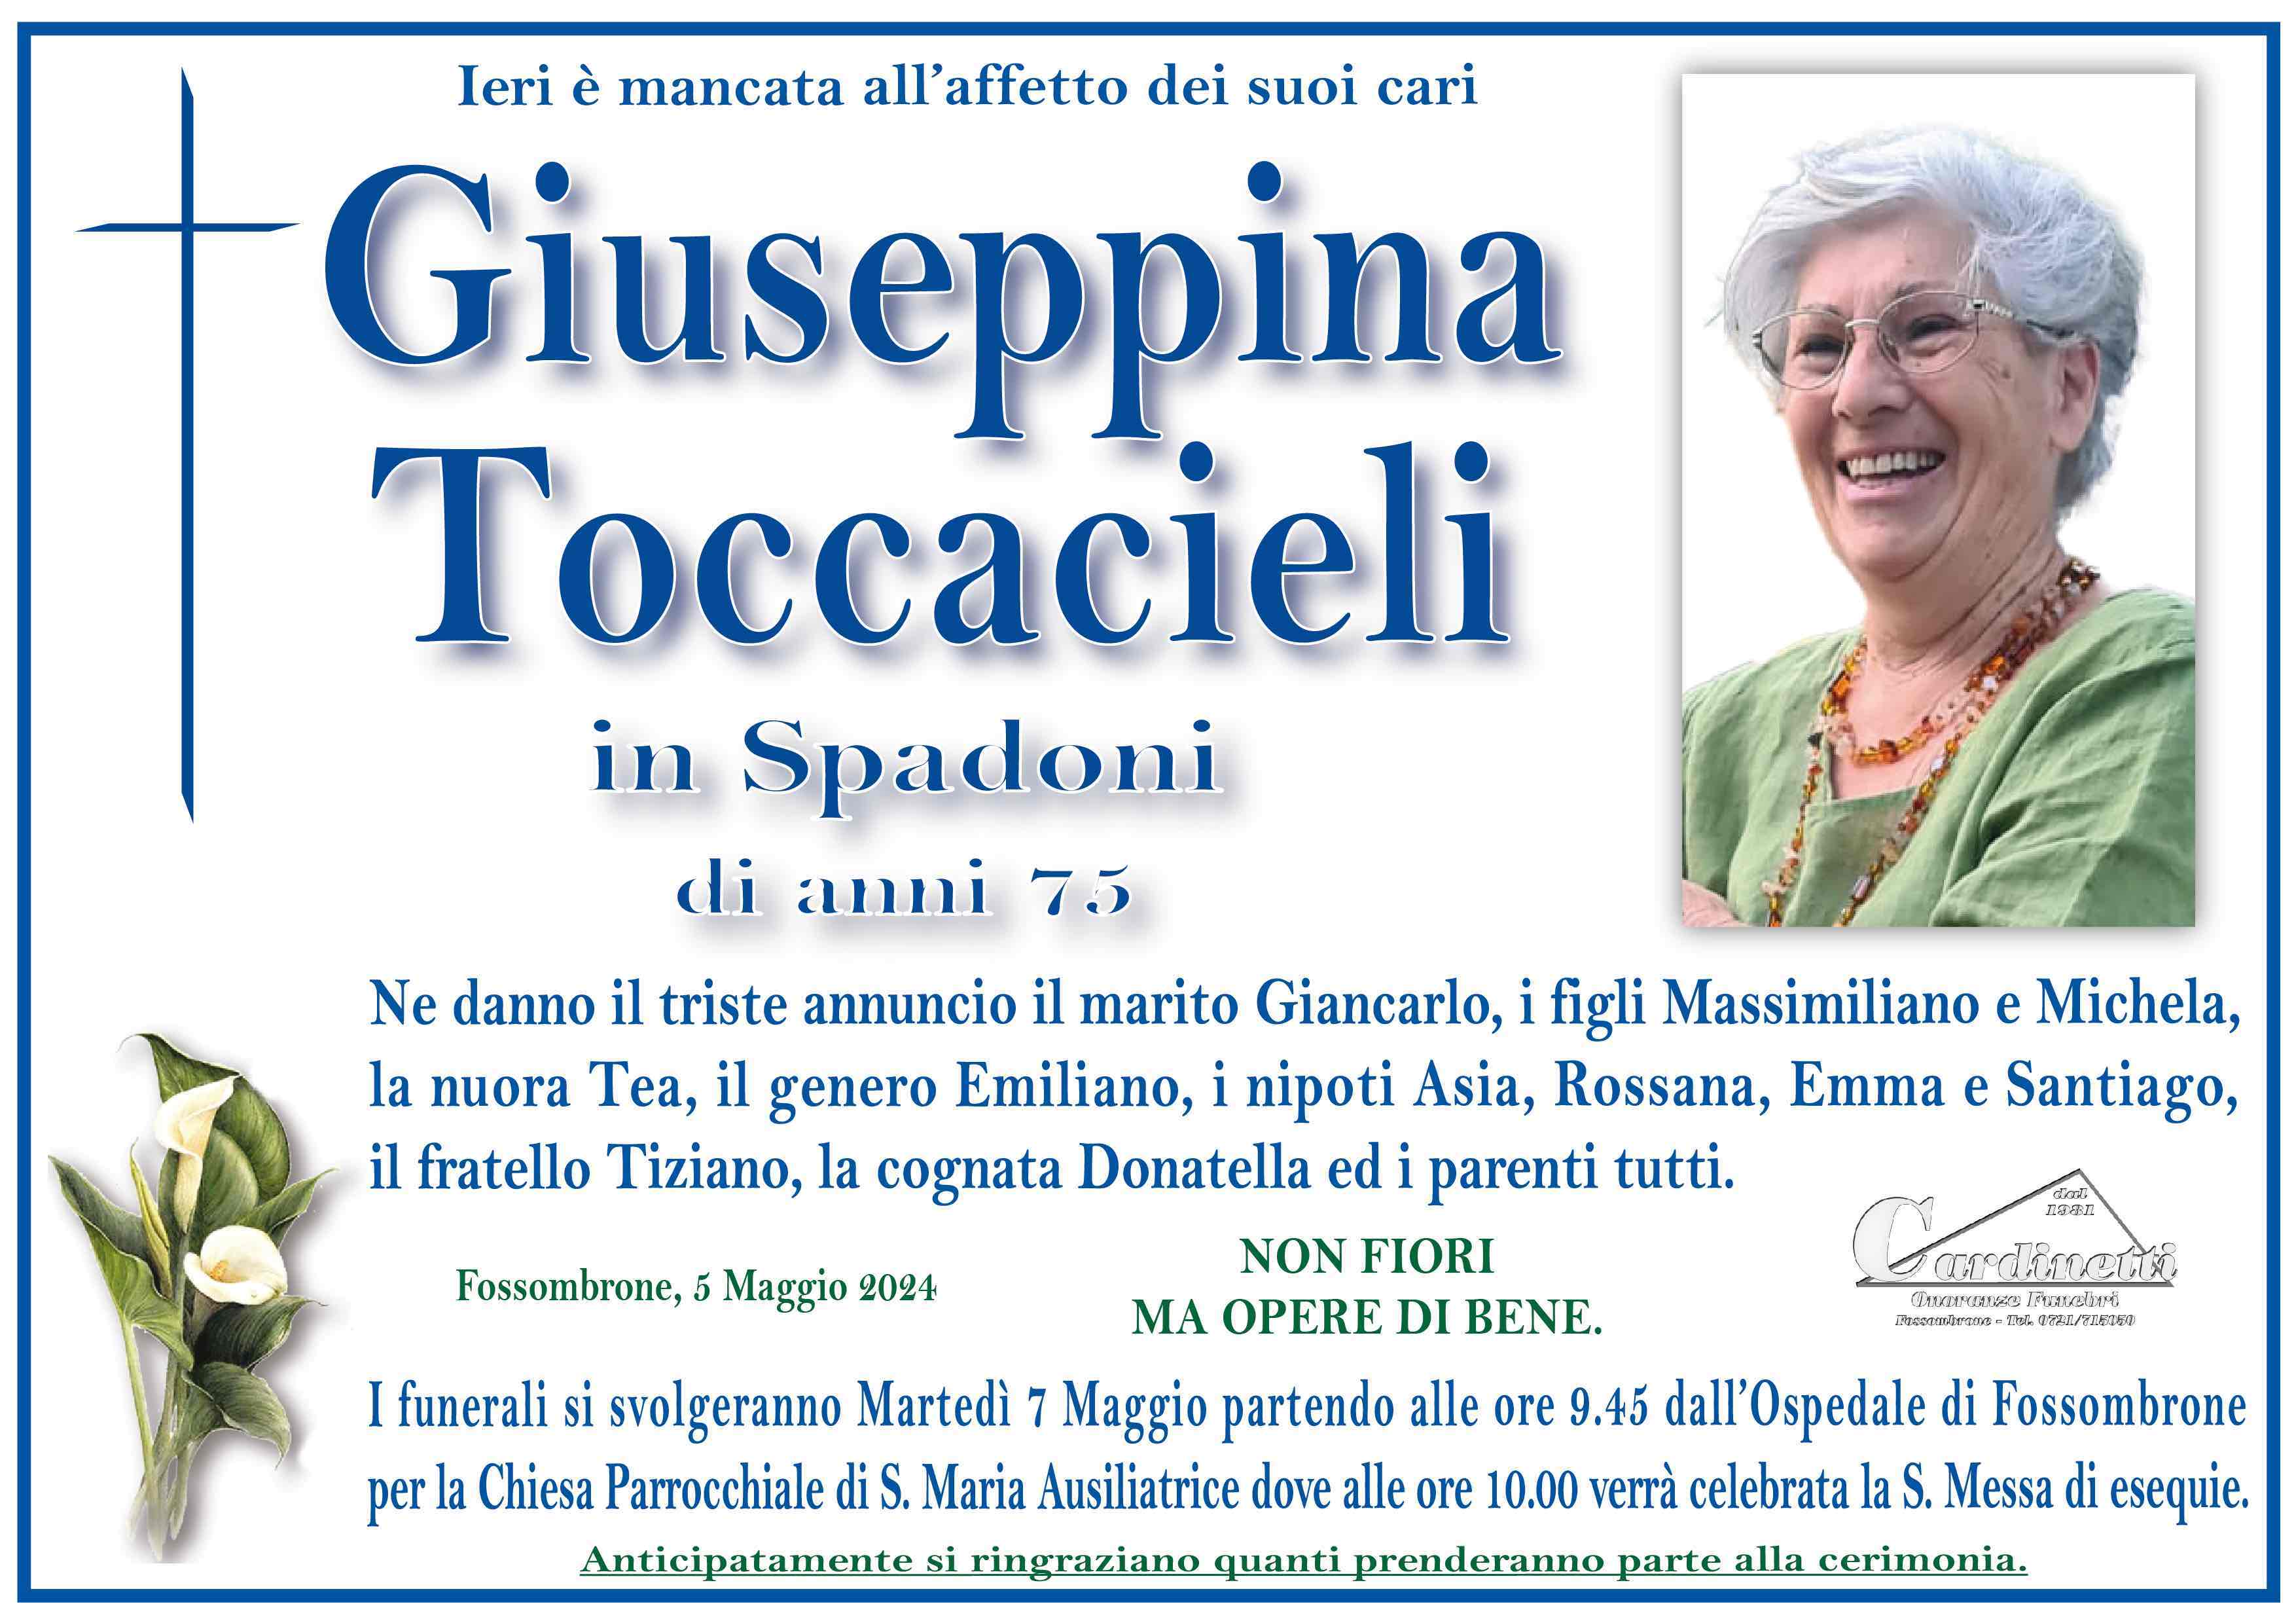 Giuseppina Toccacieli